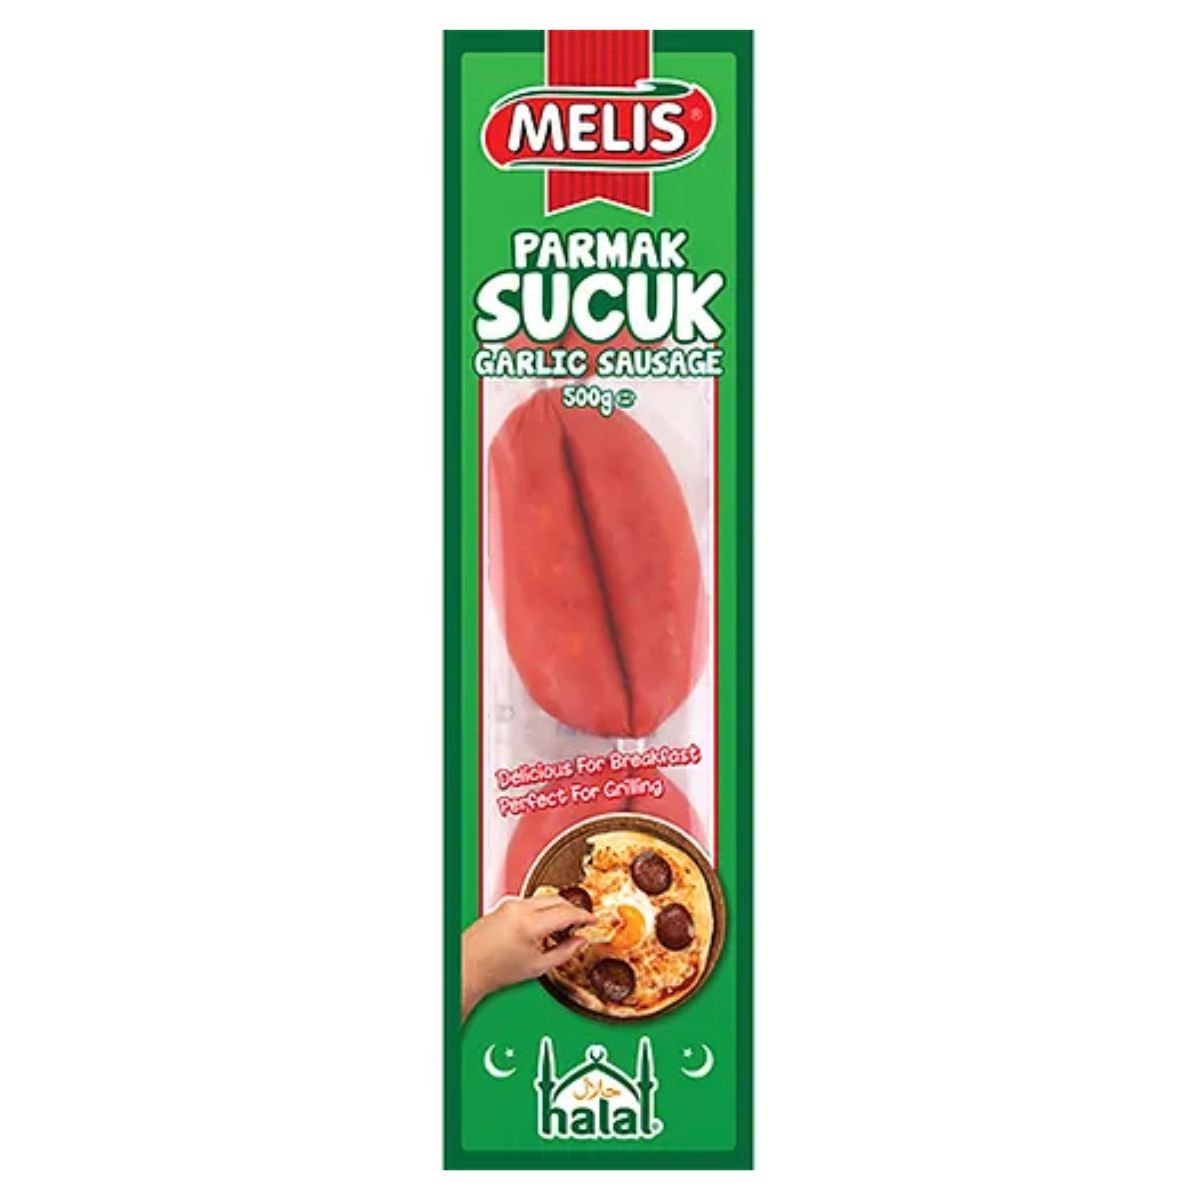 Melis's Parmak Sucuk Garlic Sausage - pack of 2.